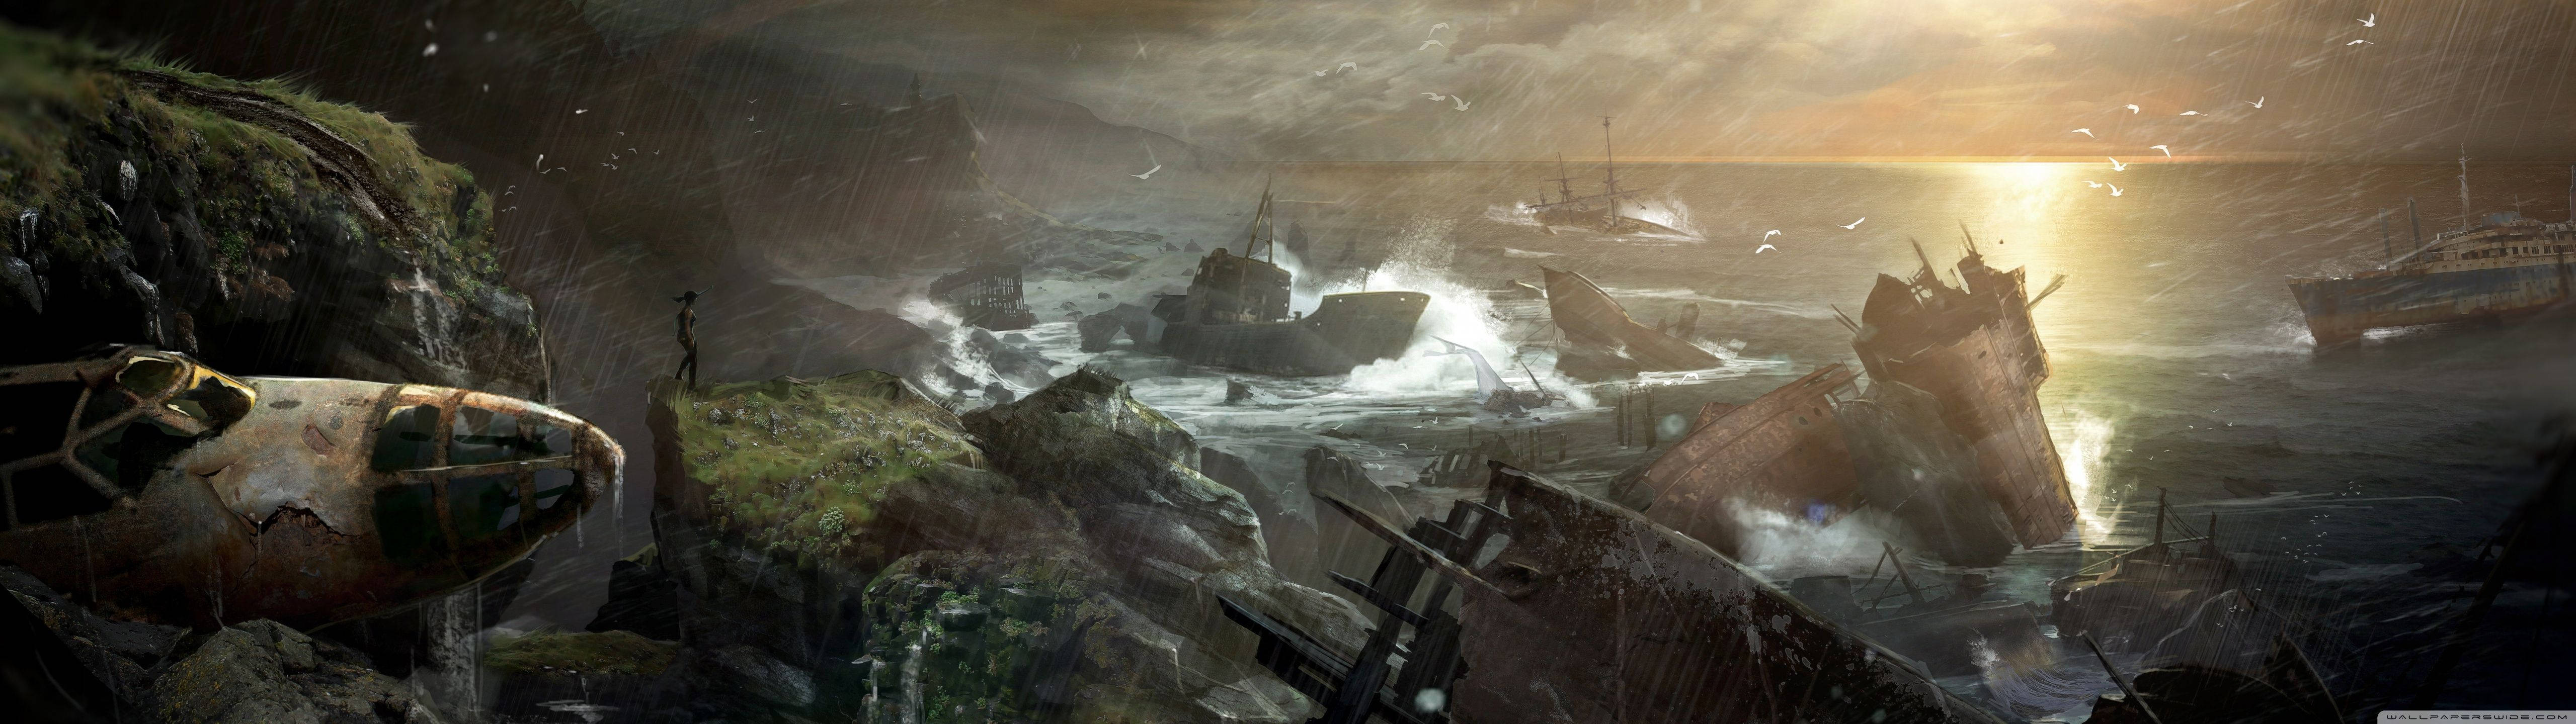 5120x1440 Game Tomb Raider Shipwrecks Wallpaper